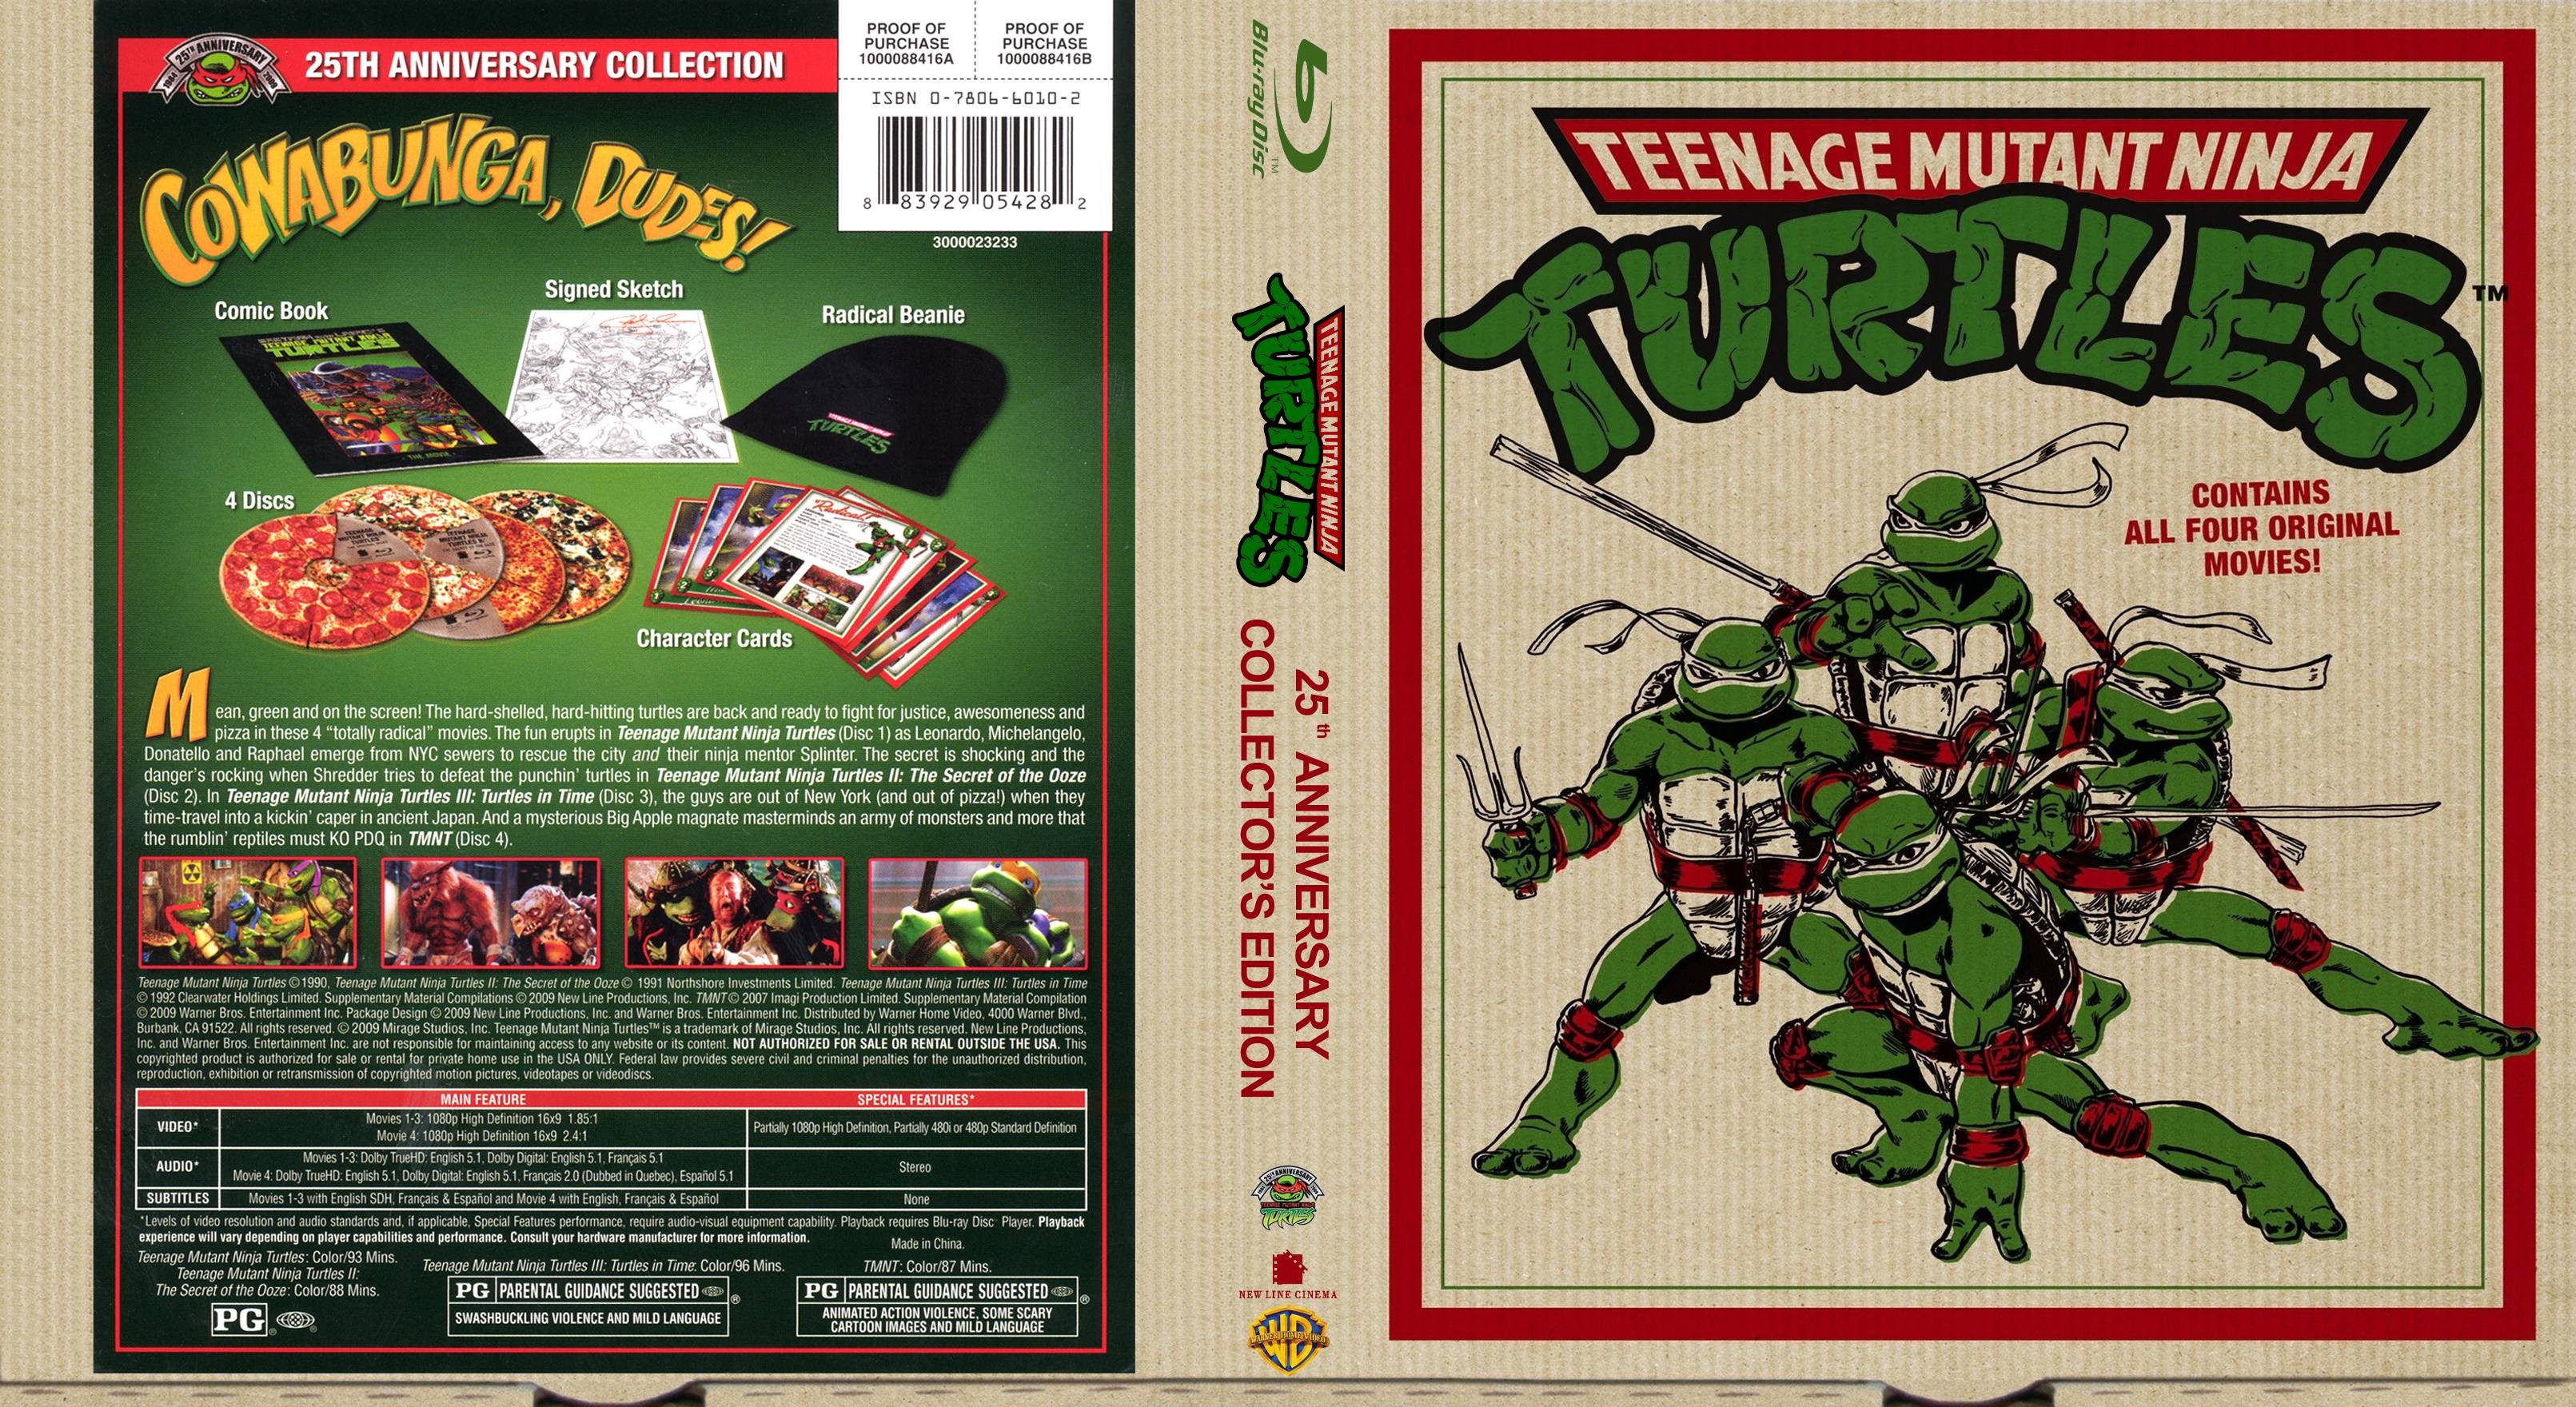 Jaquette DVD Les tortues ninjas trilogie COFFRET(Canadienne) (BLU-RAY)